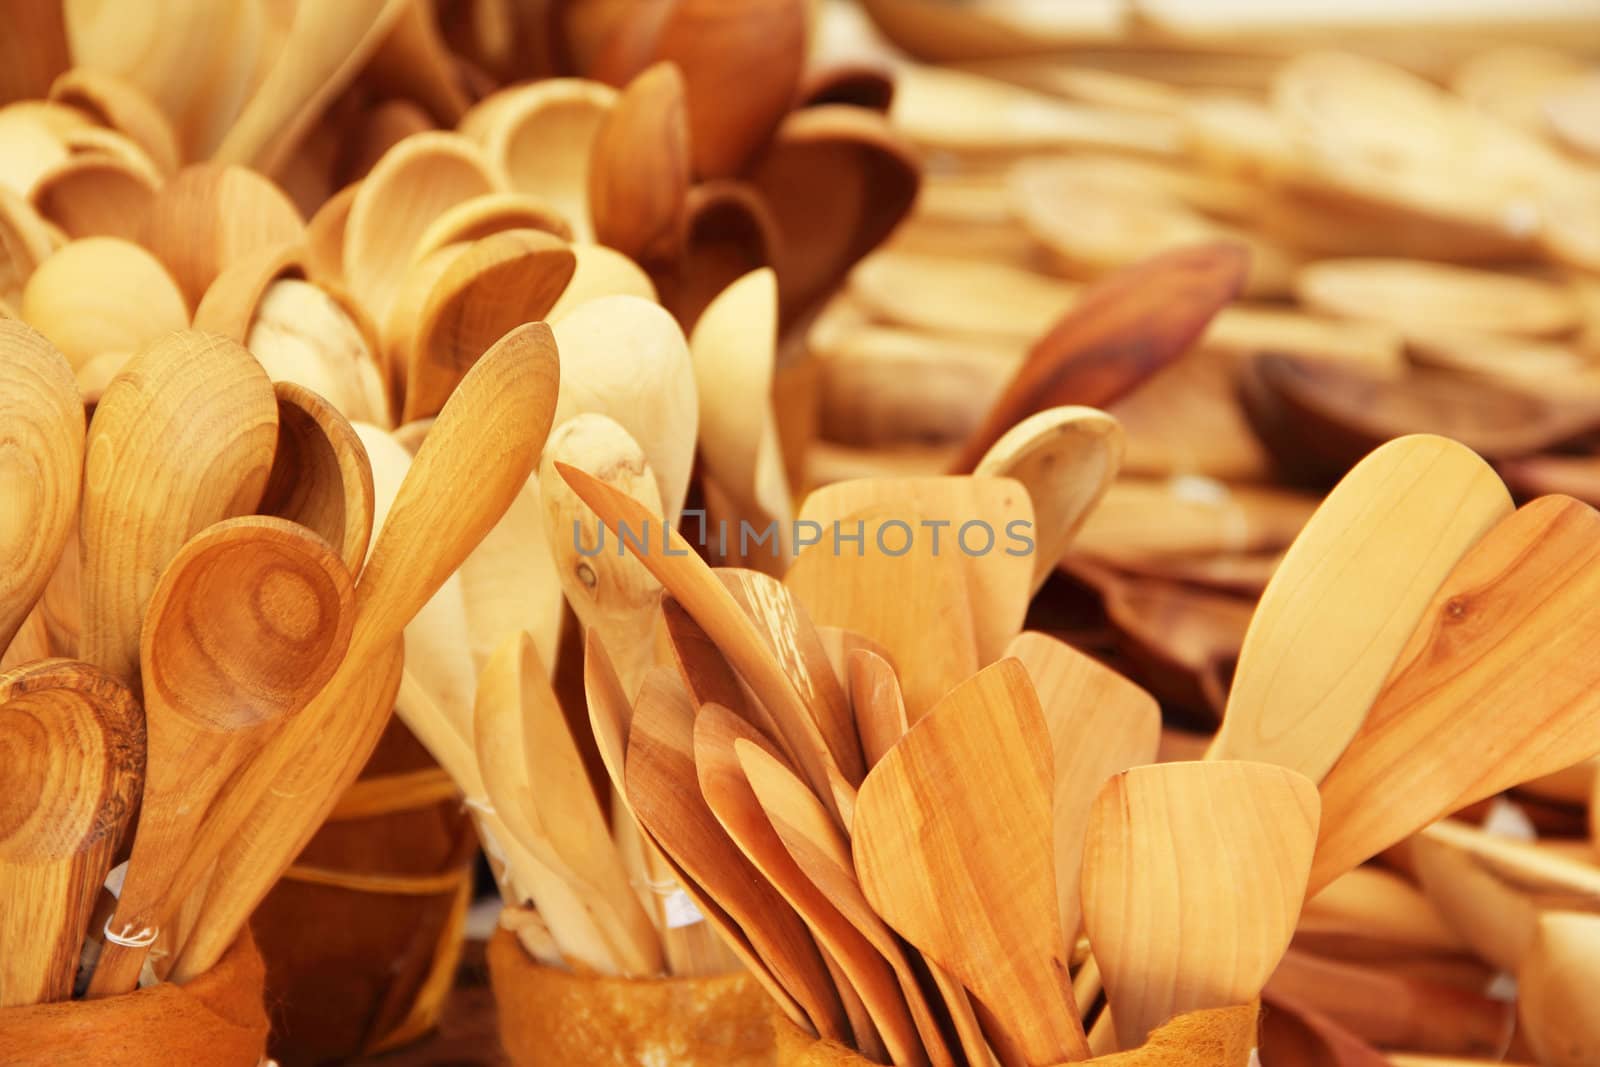 Wooden spoons by destillat